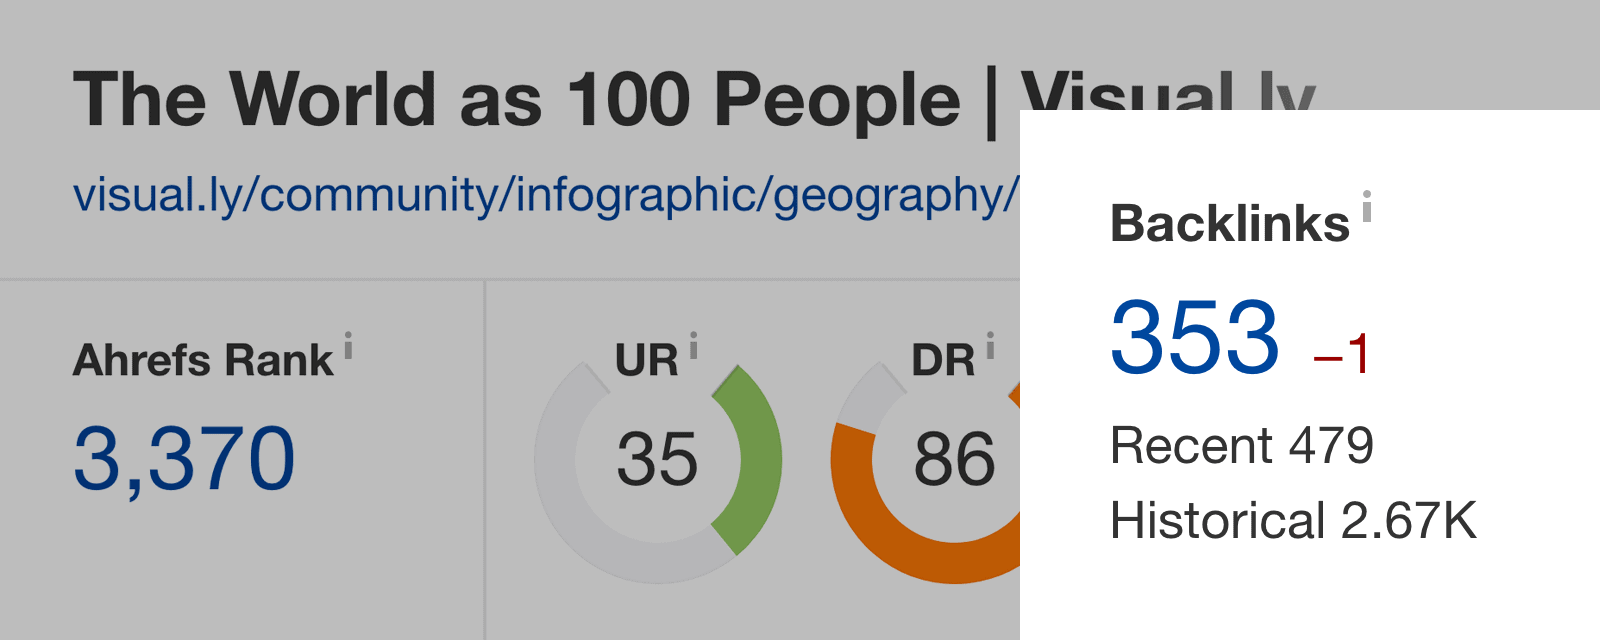 World as 100 people – Backlinks